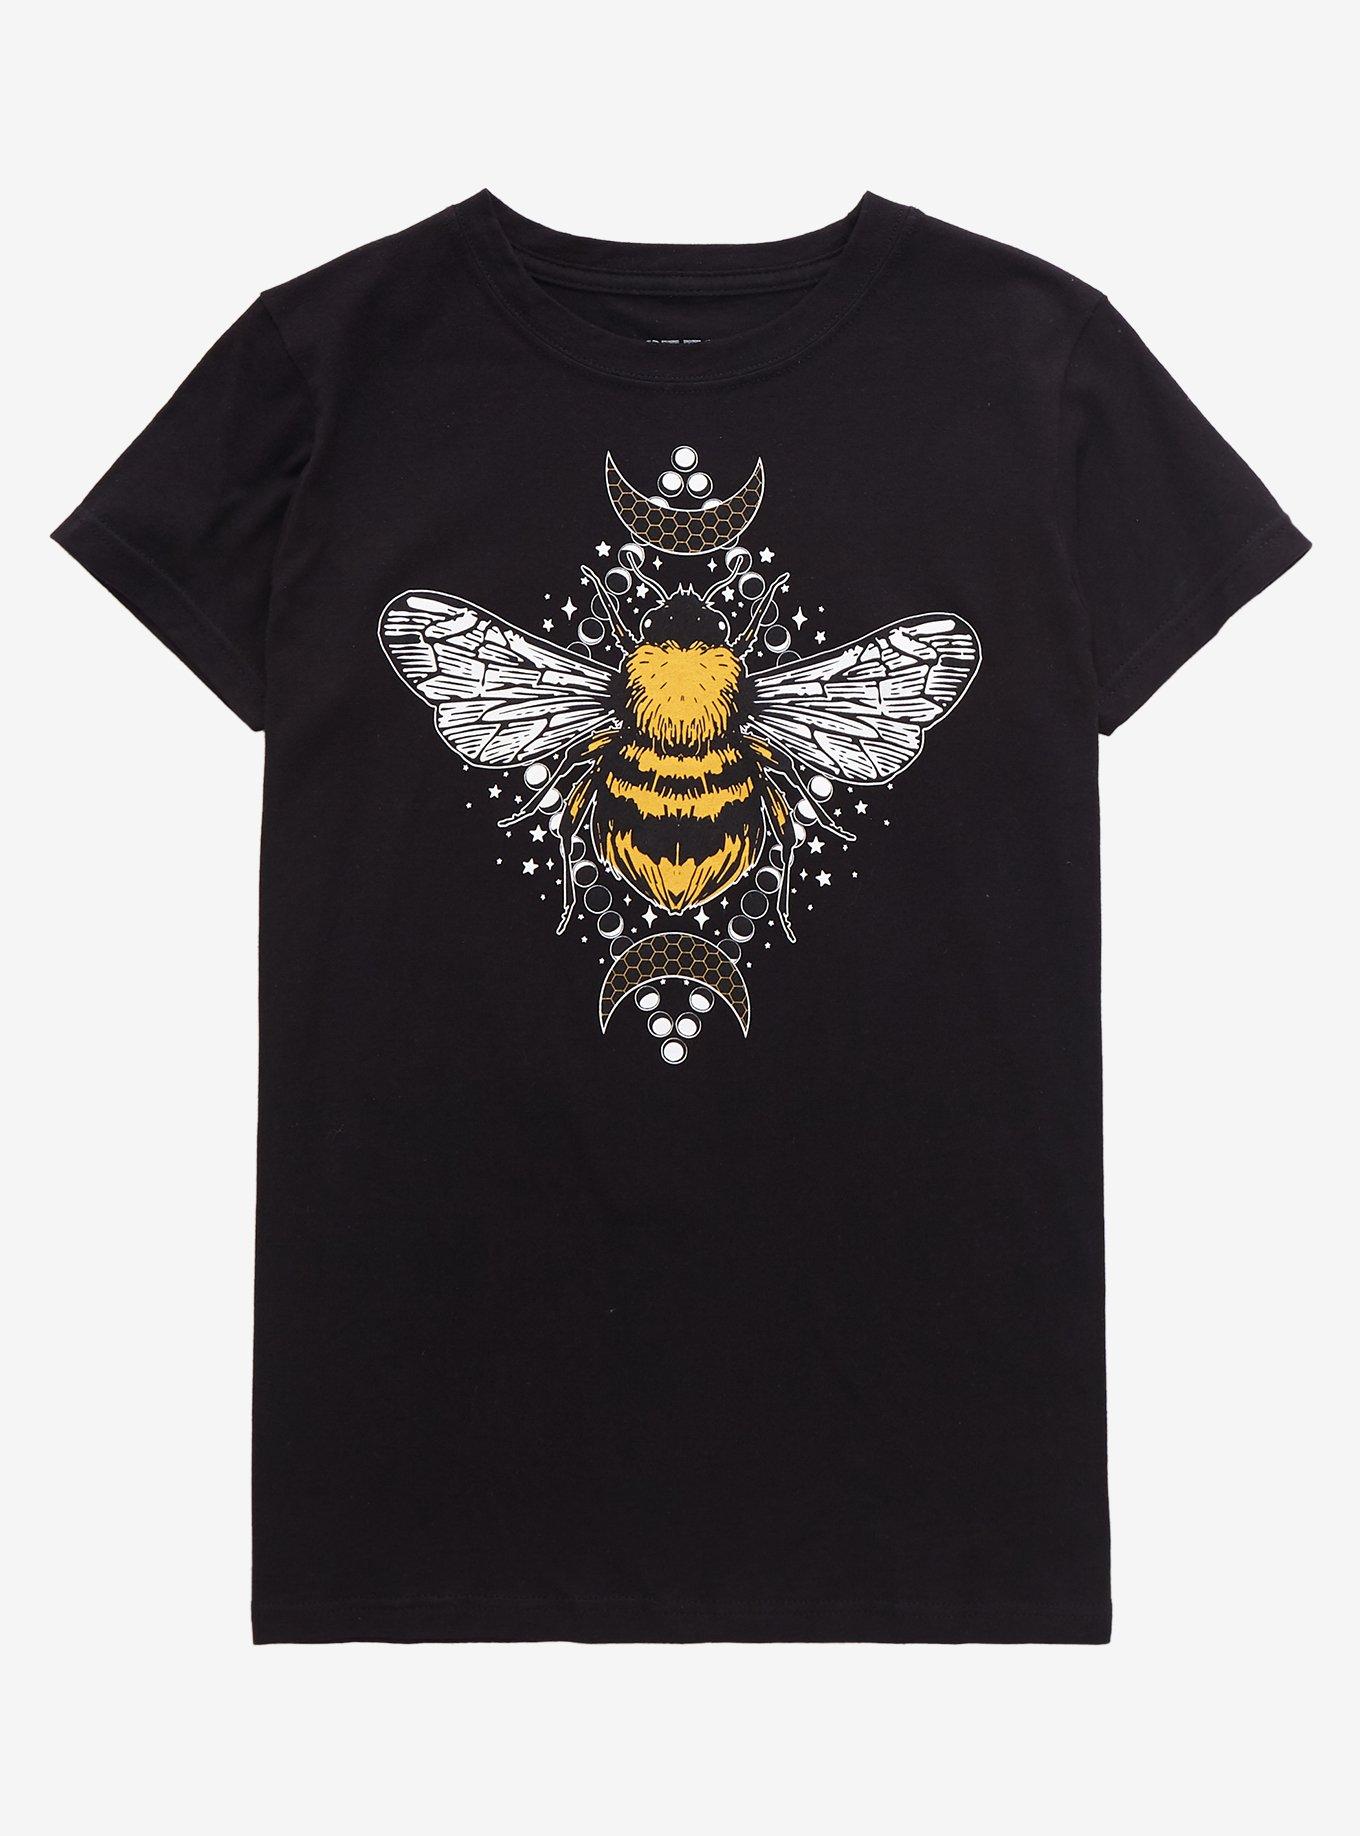 Bumble Bee Moon Phase Boyfriend Fit Girls T-Shirt, MULTI, hi-res